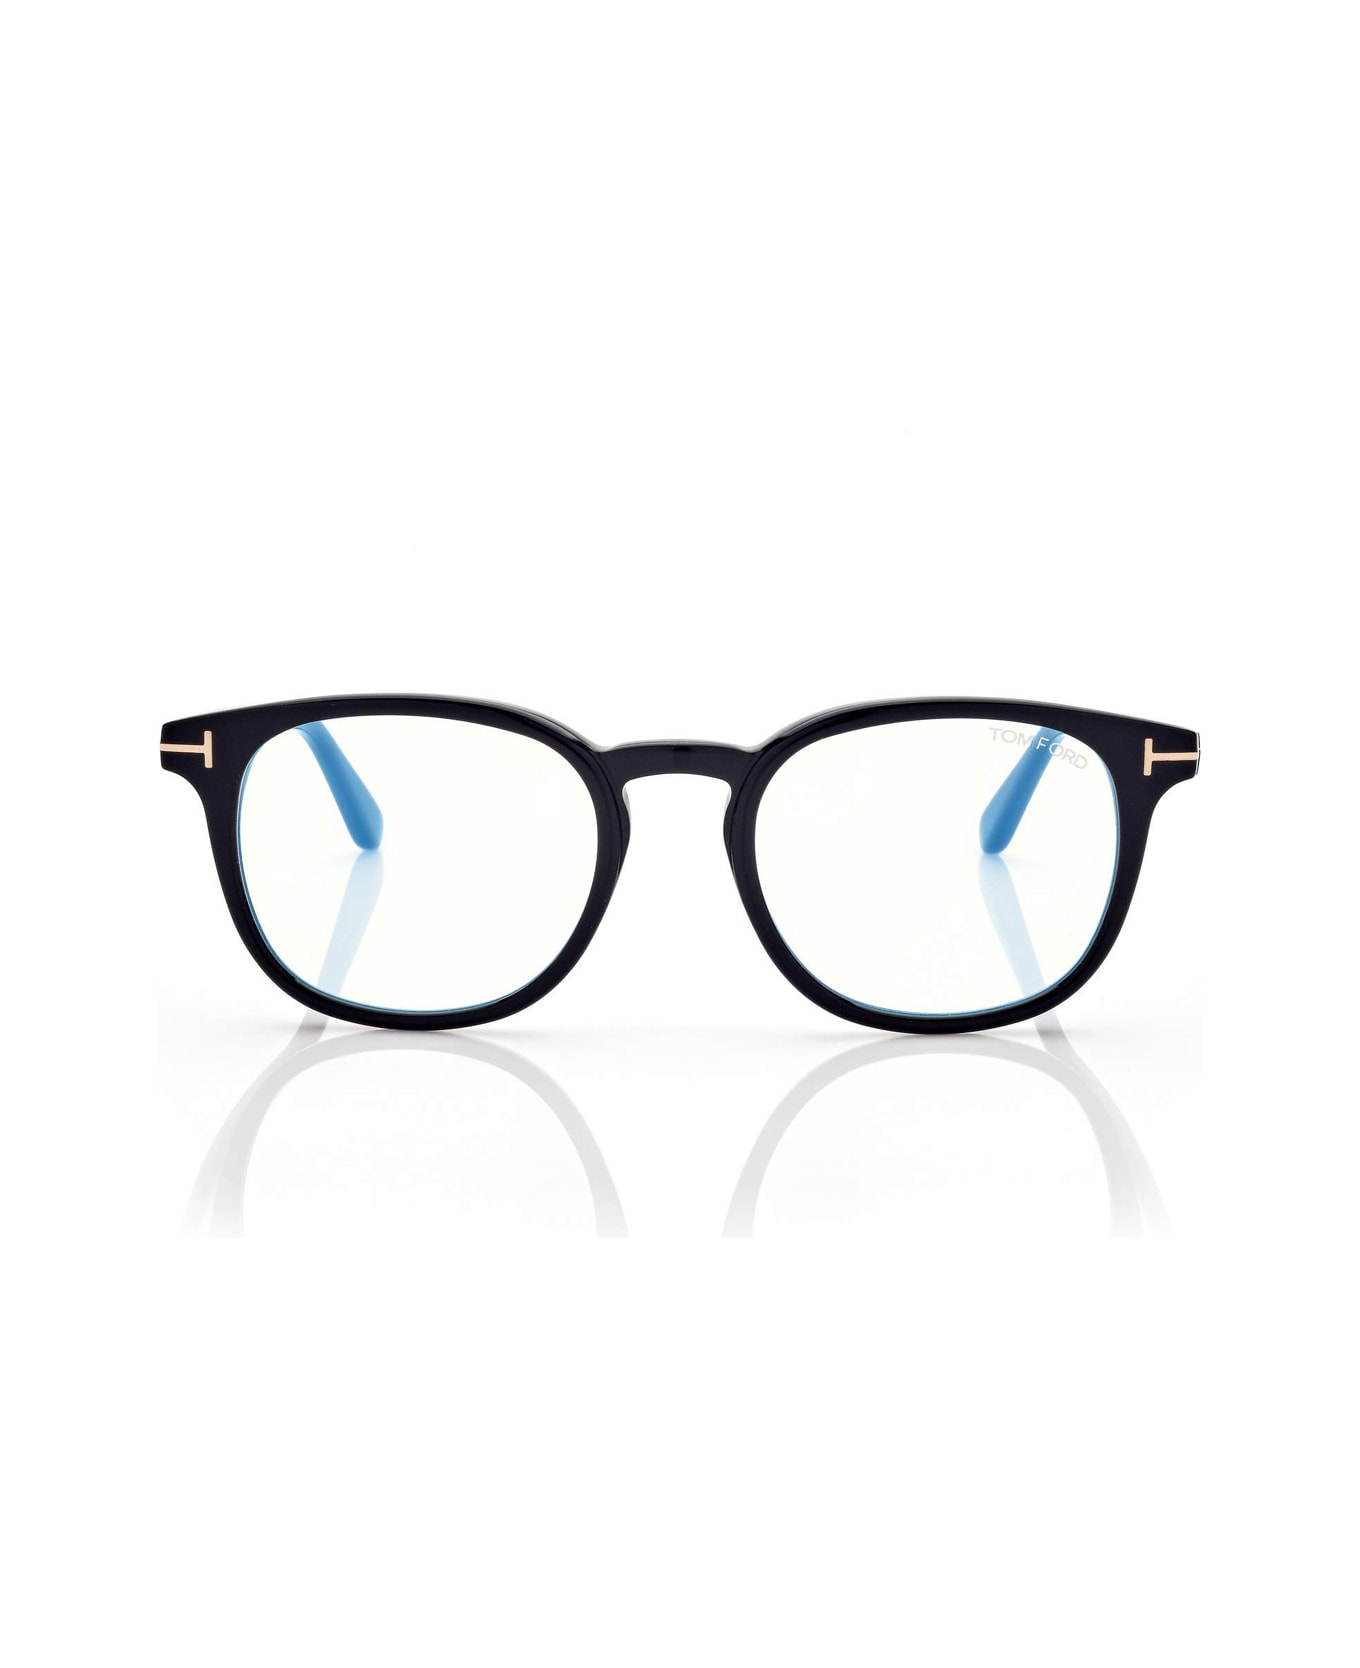 Tom Ford Eyewear Ft5819 Glasses - Nero アイウェア